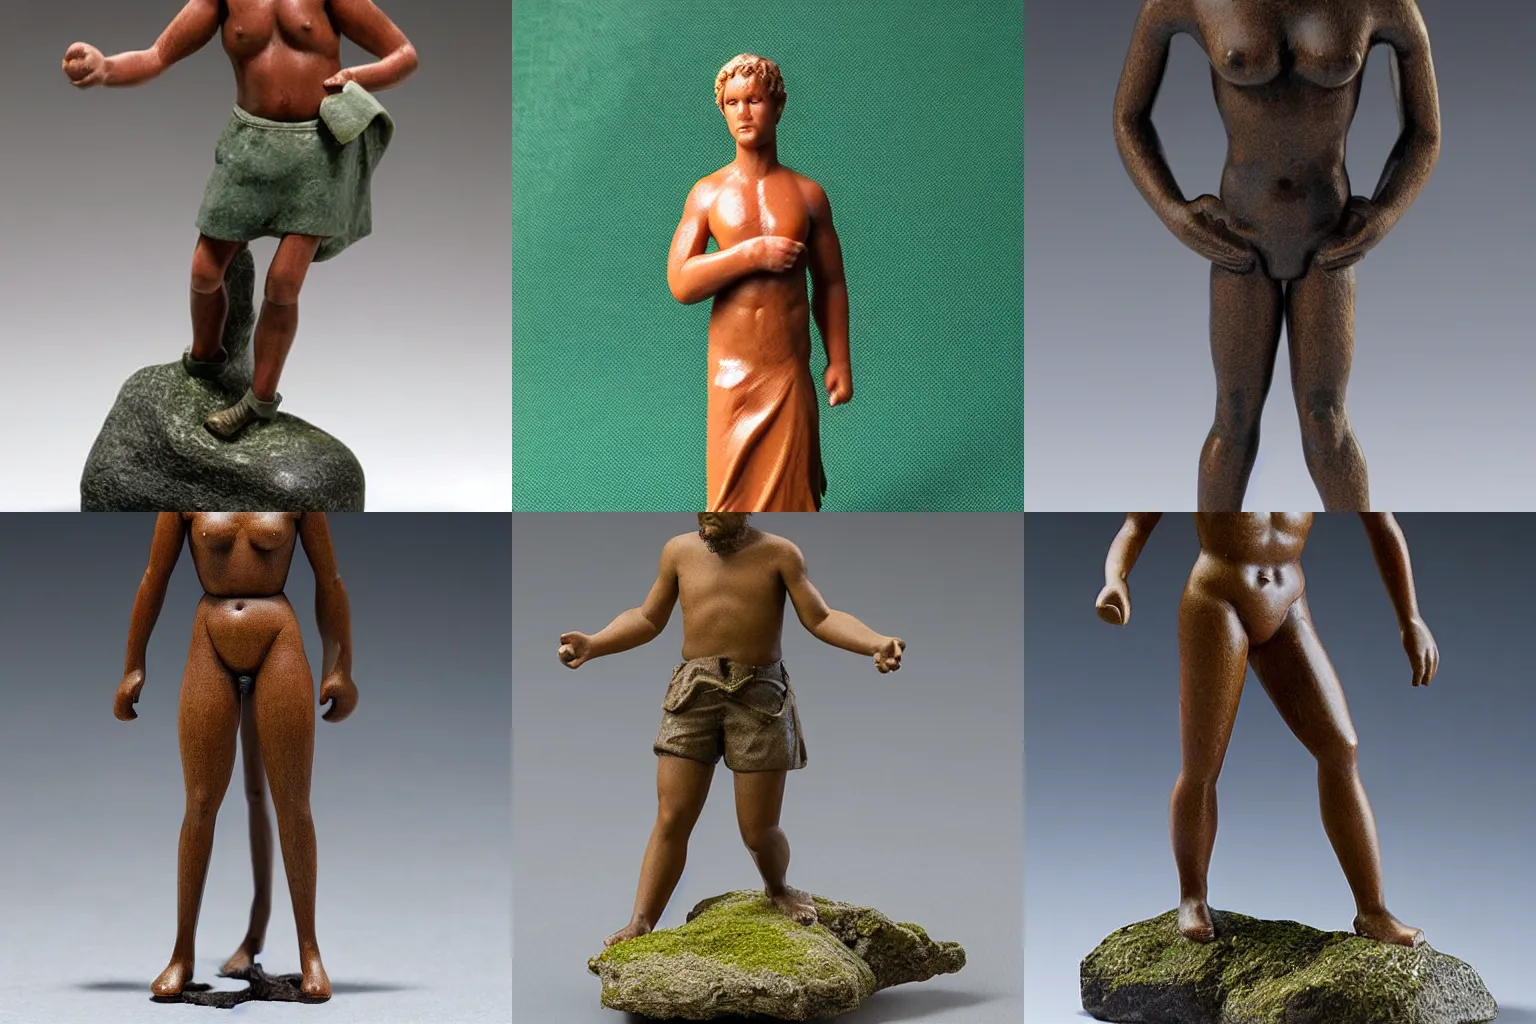 Prompt: a nothofagus model figurine